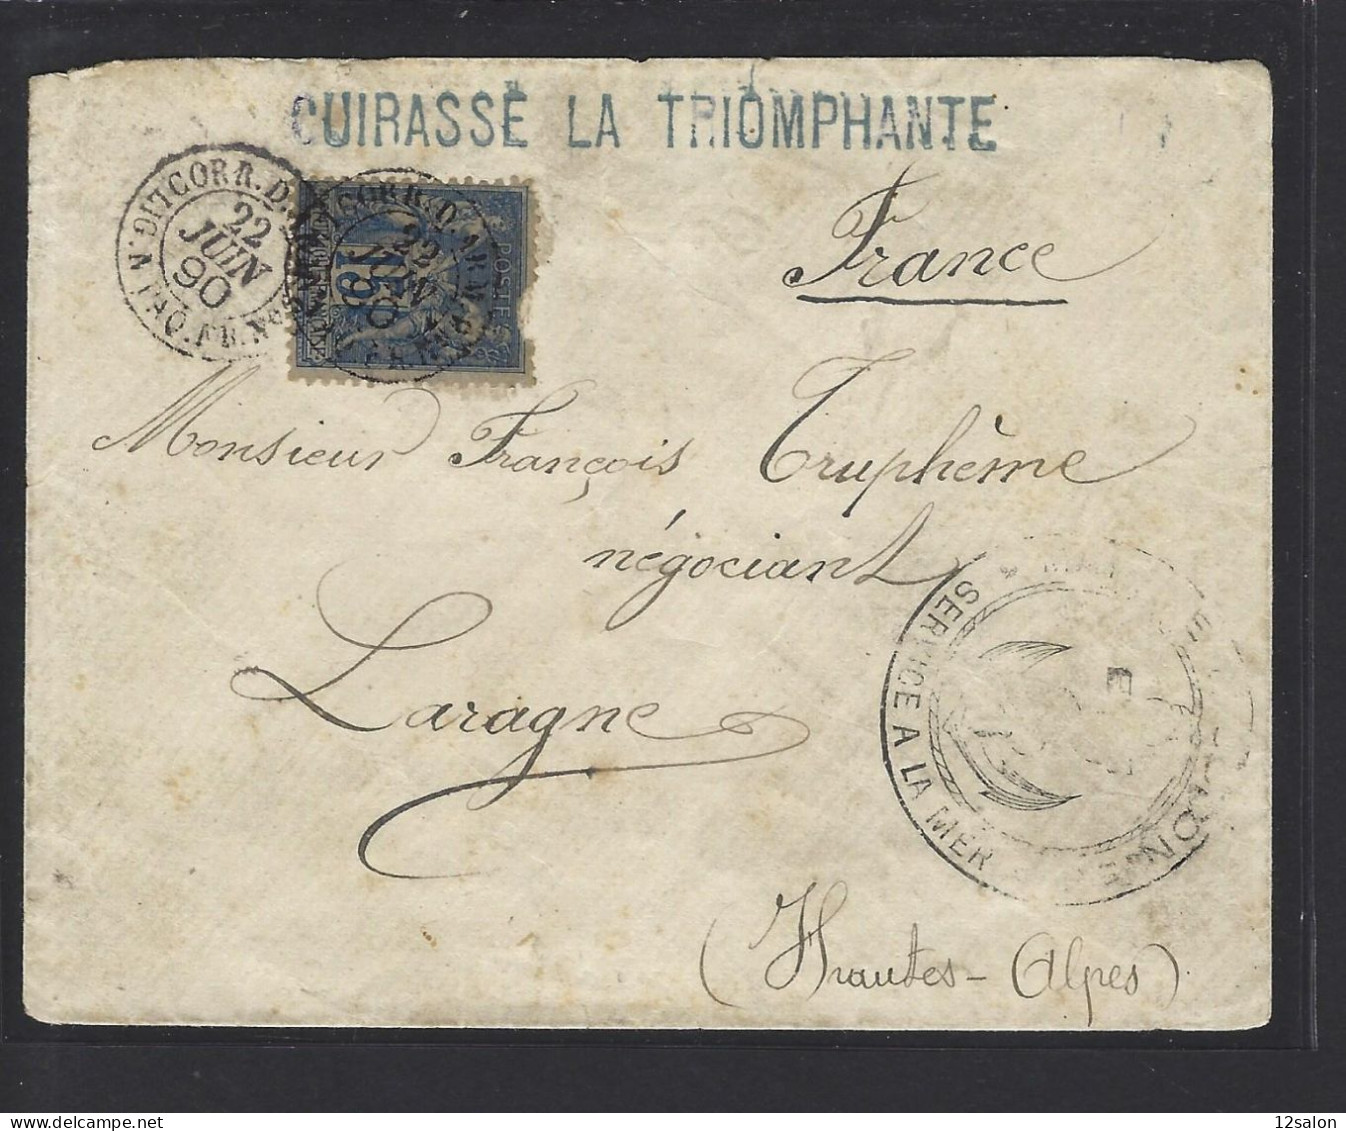 MARITIME SAGE °90, Def, OBL CAD "Corr D Arm Lig N Paq FR N°8" (1890 - Salles N°1949) "Cuirassé La Triomphante" - Poste Maritime